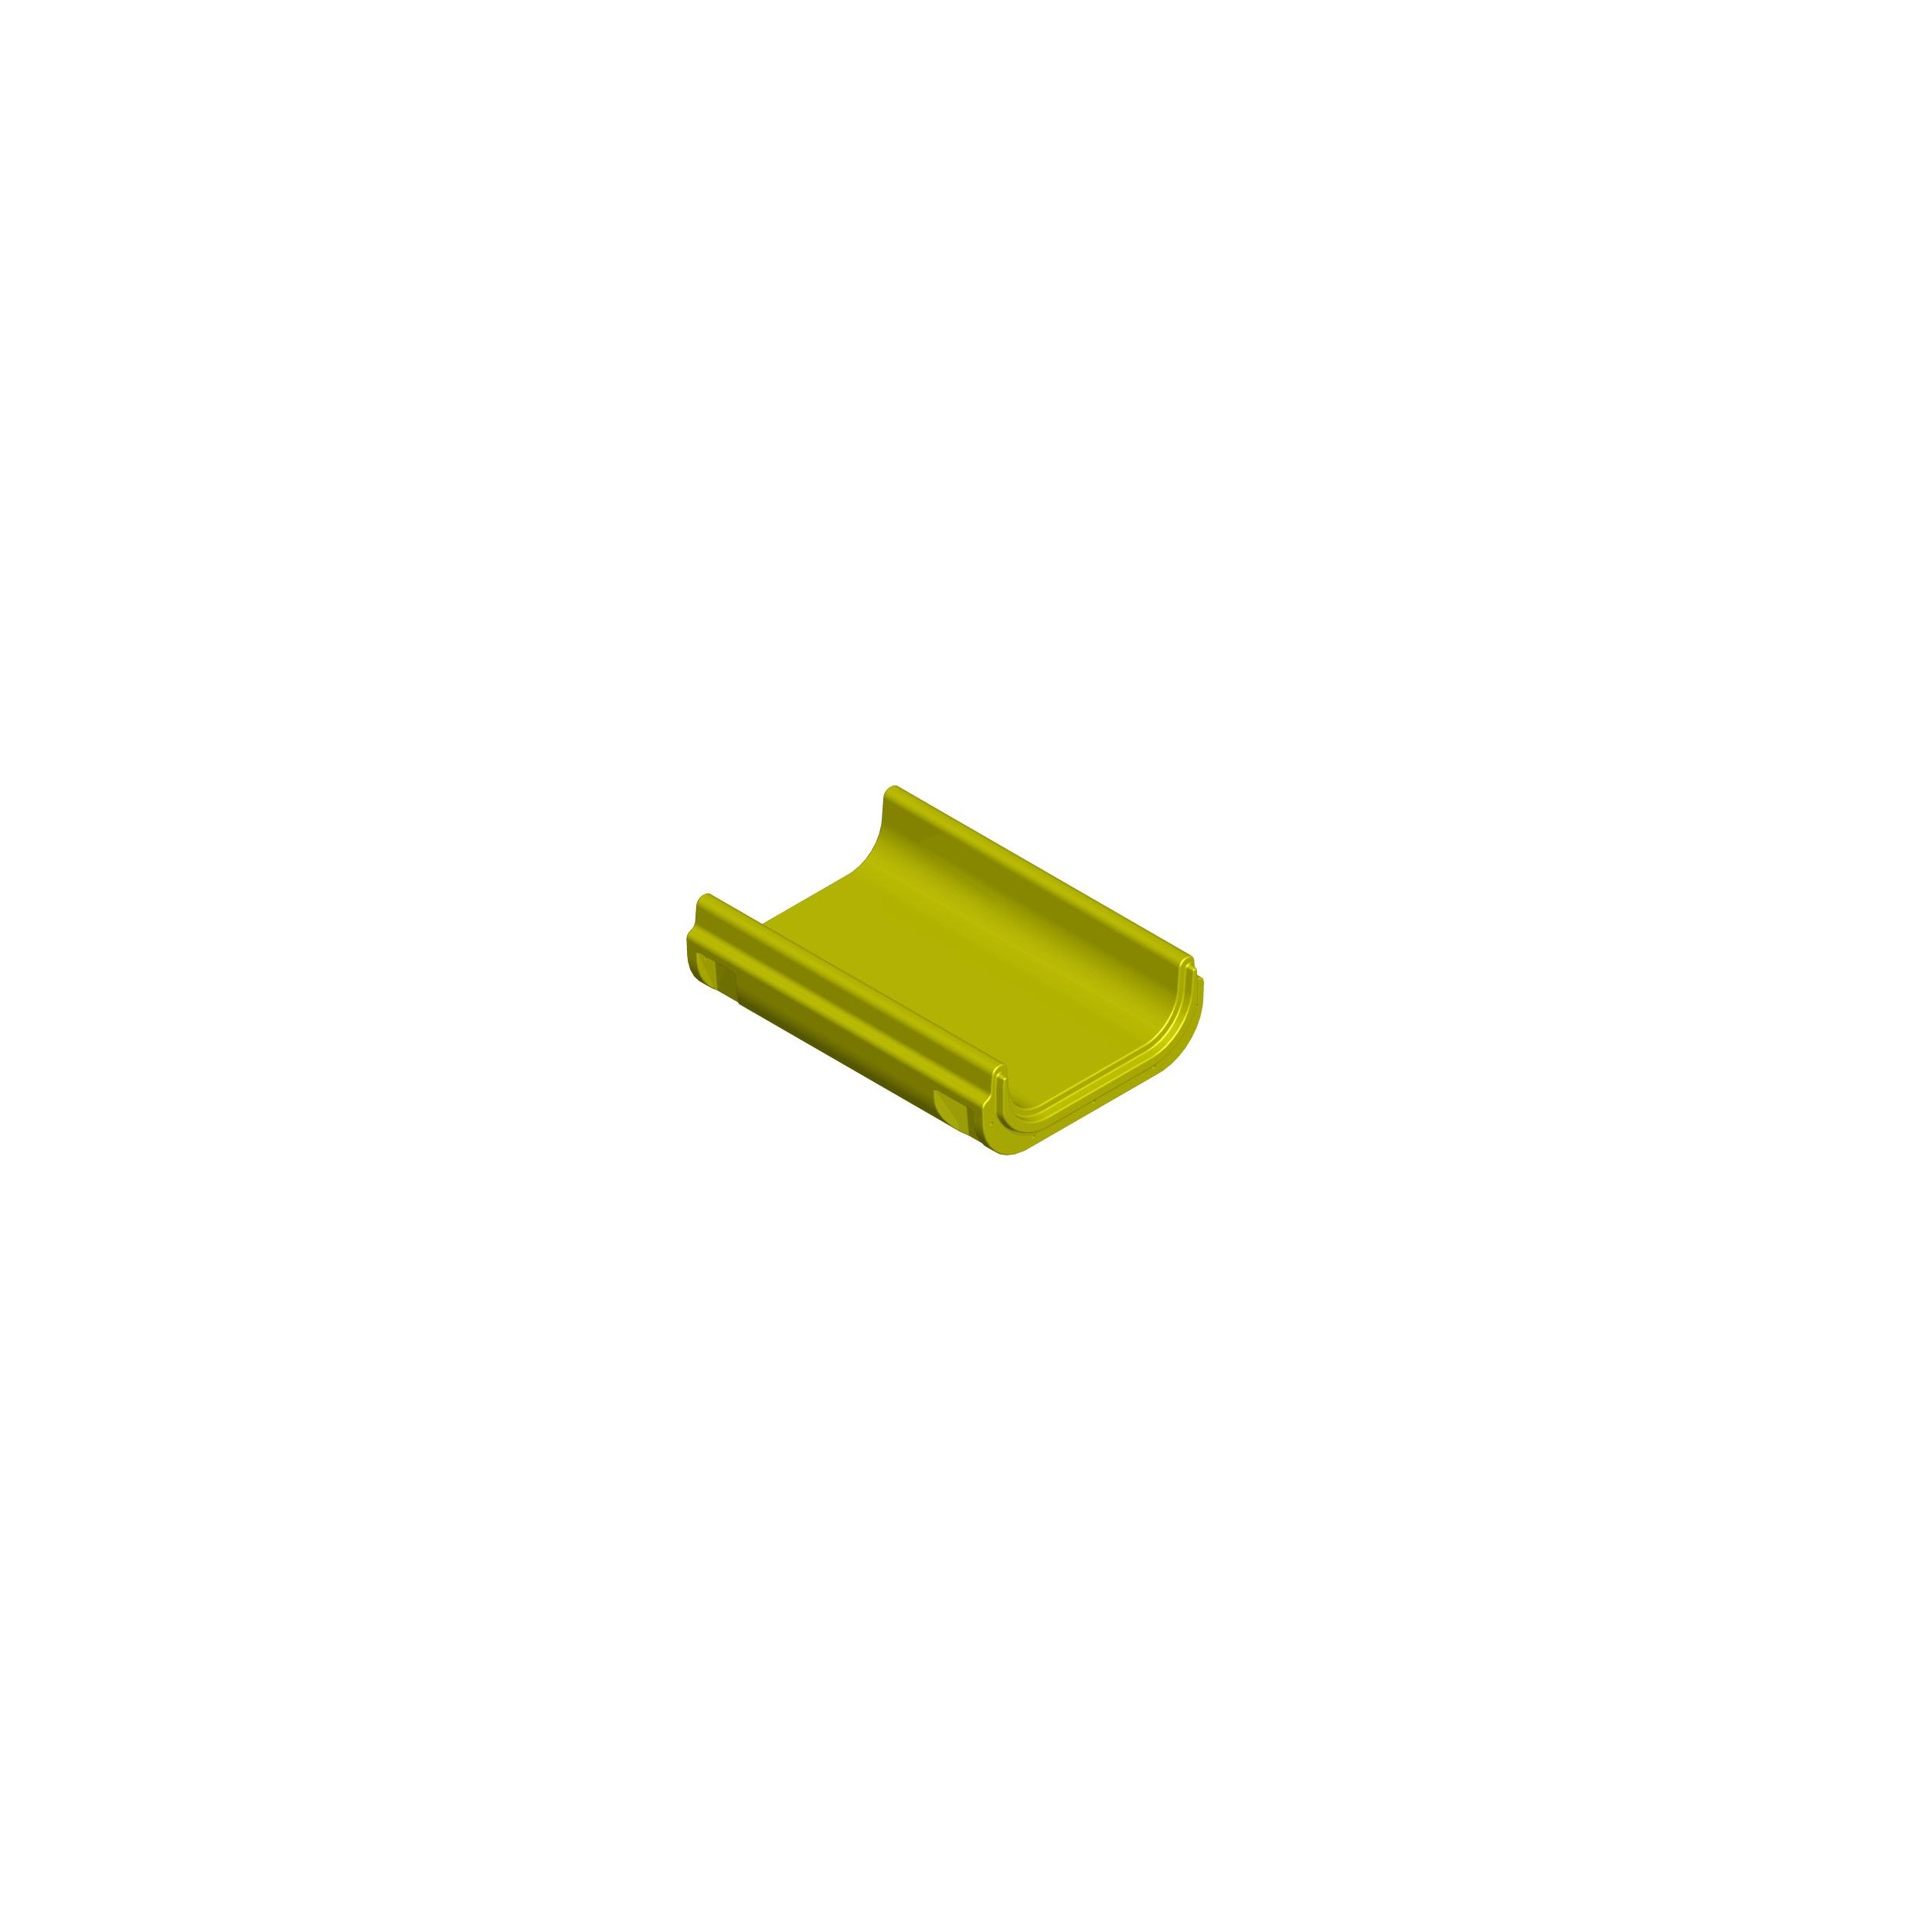 Module slide part C middle section - length 106 cm yellow